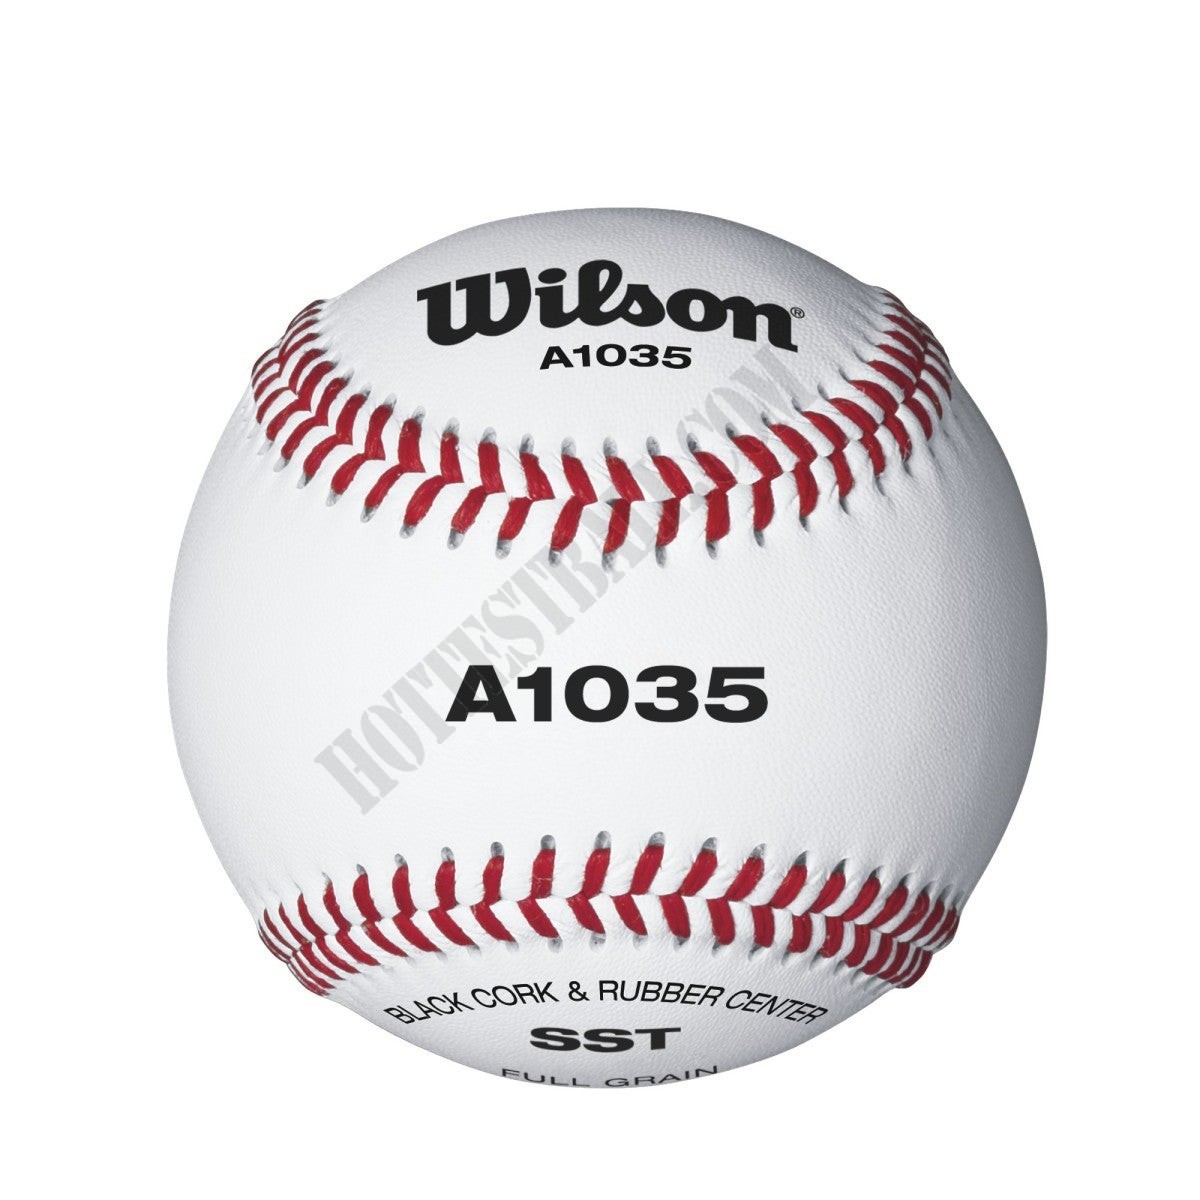 A1035 Champion Series SST Baseballs - Wilson Discount Store - A1035 Champion Series SST Baseballs - Wilson Discount Store